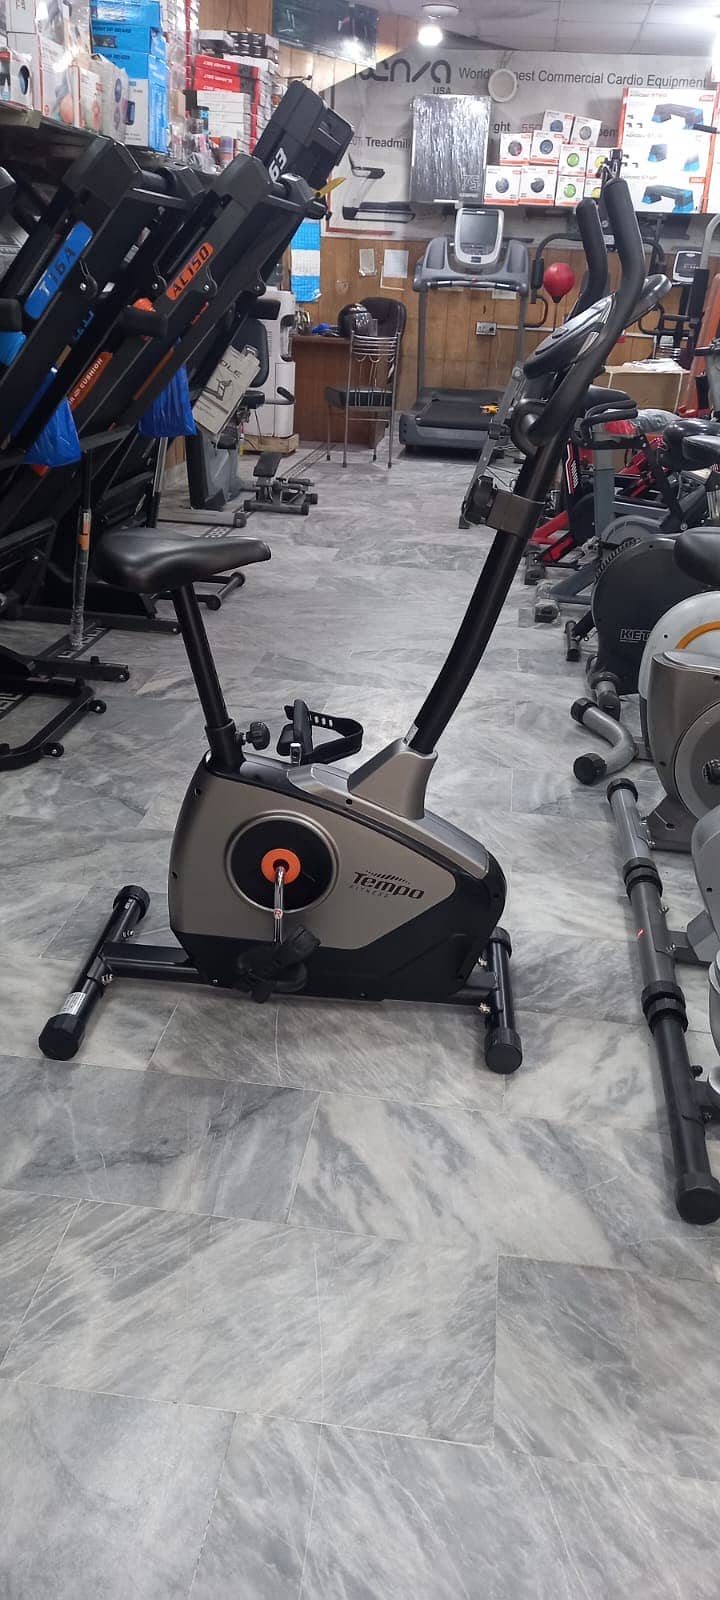 Exercise elliptical |treadmill |upright bike spin bike| cycle|dumbball 1